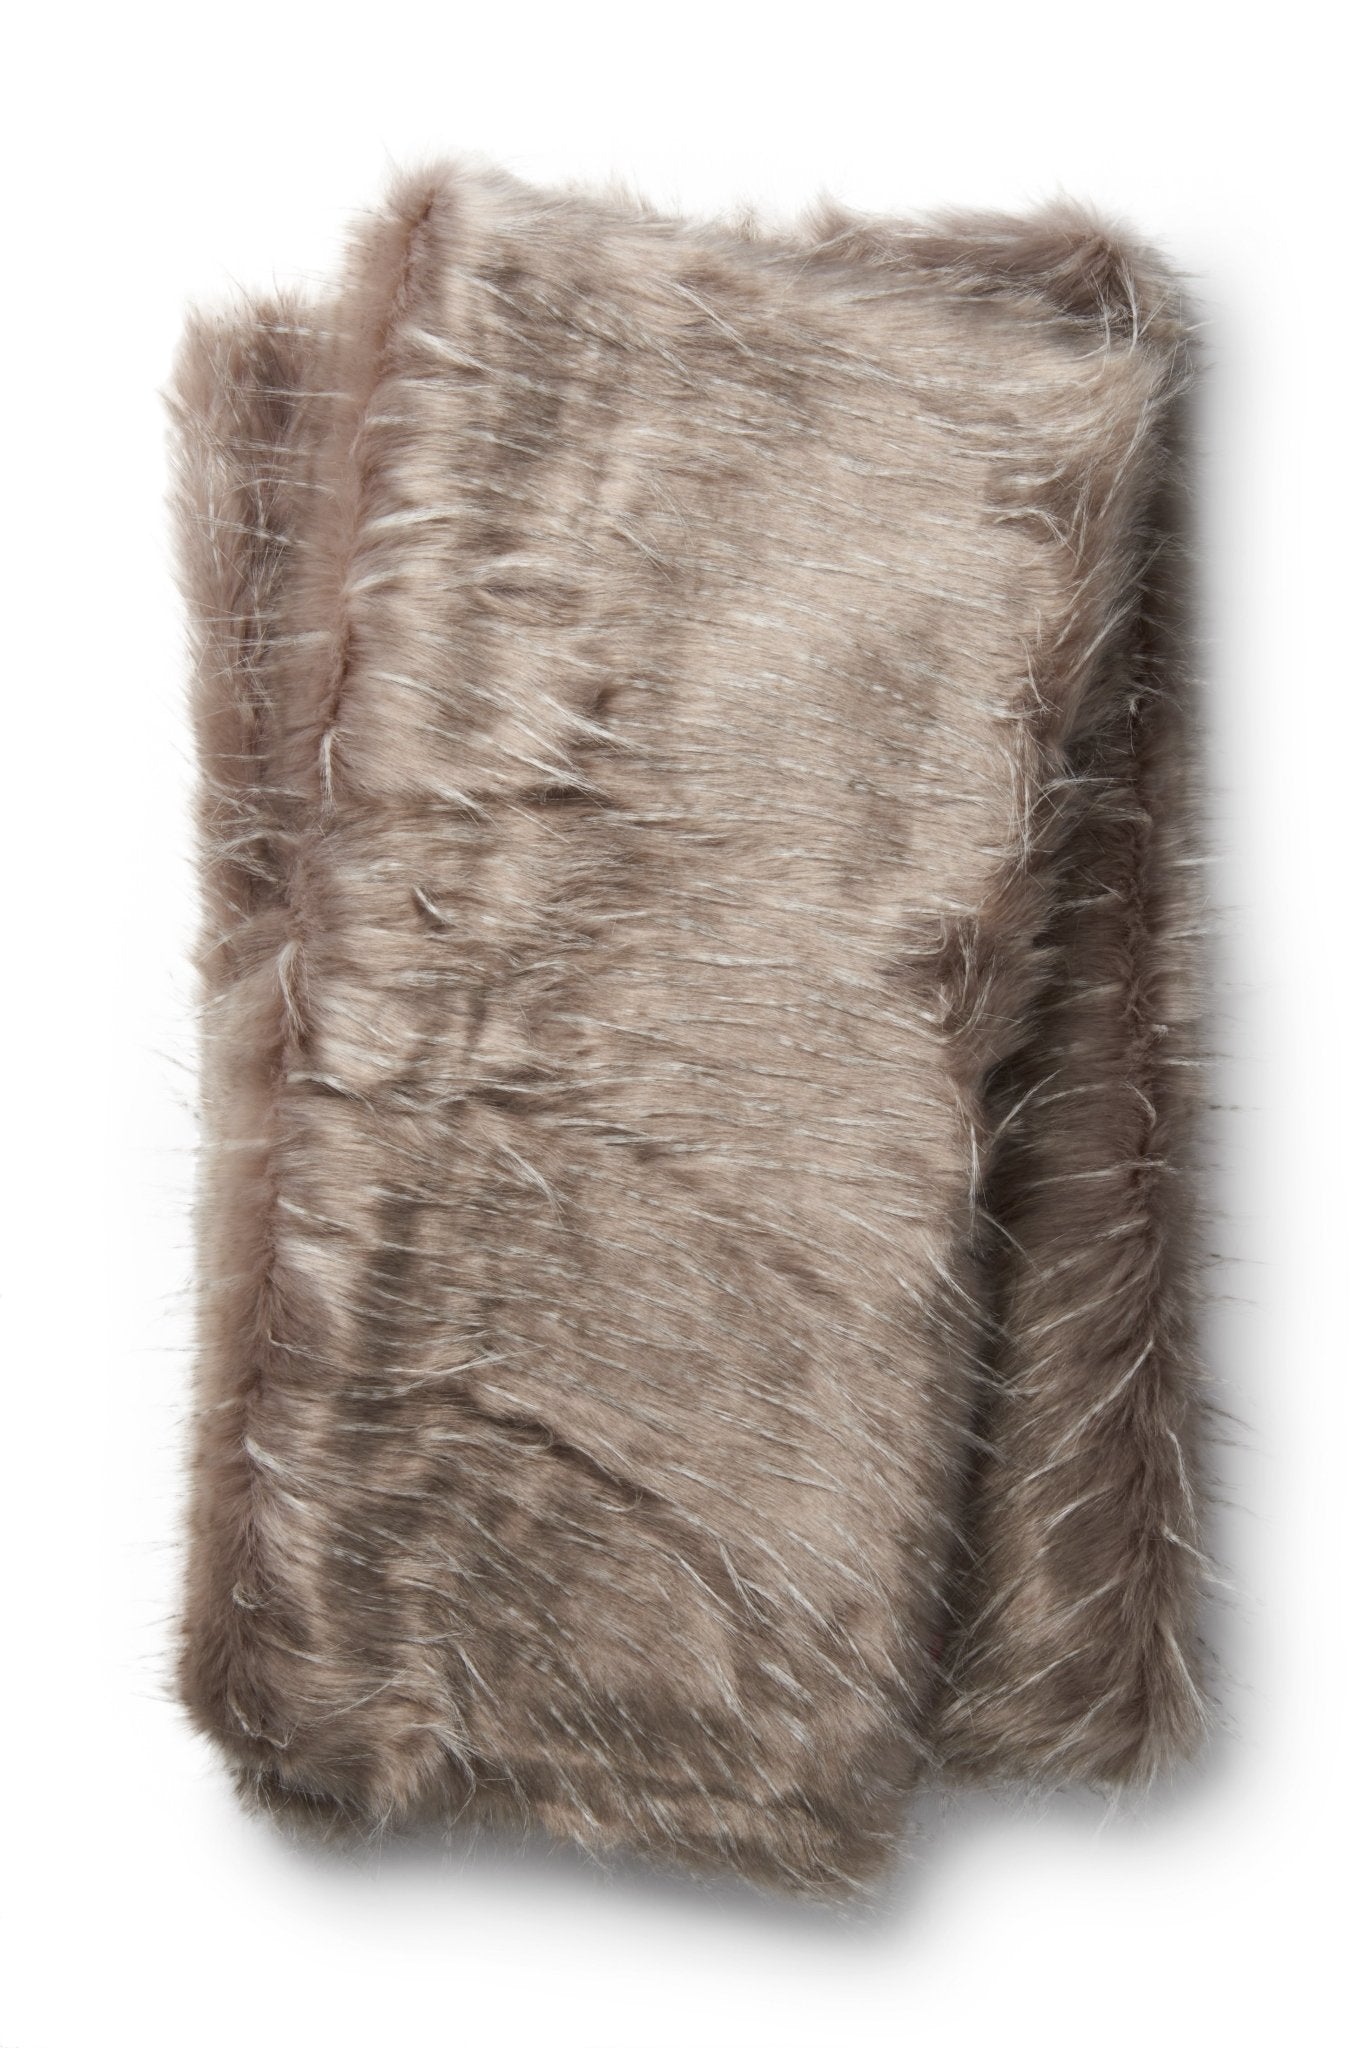 Zora T0022 Grey Throw Blanket - Rug & Home